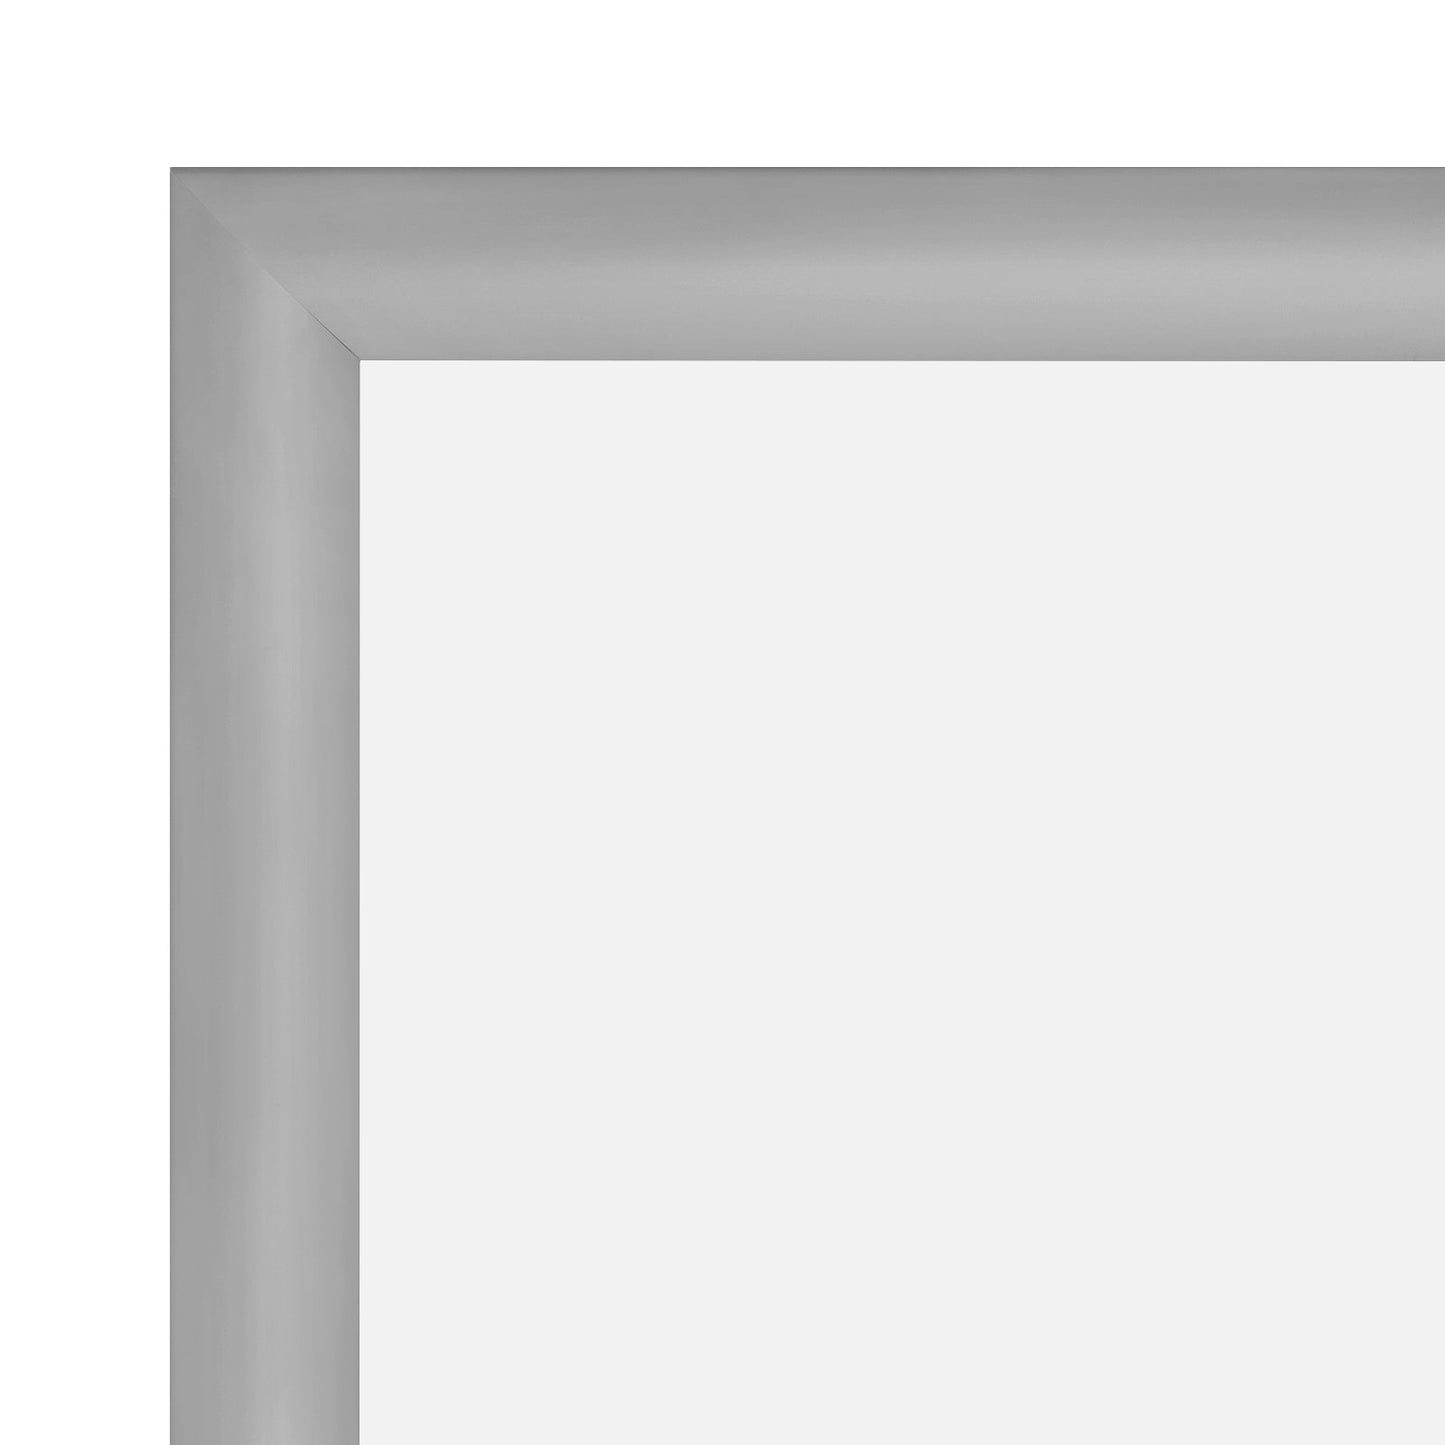 13x19 Silver SnapeZo® Snap Frame - 1.2" Profile - Snap Frames Direct